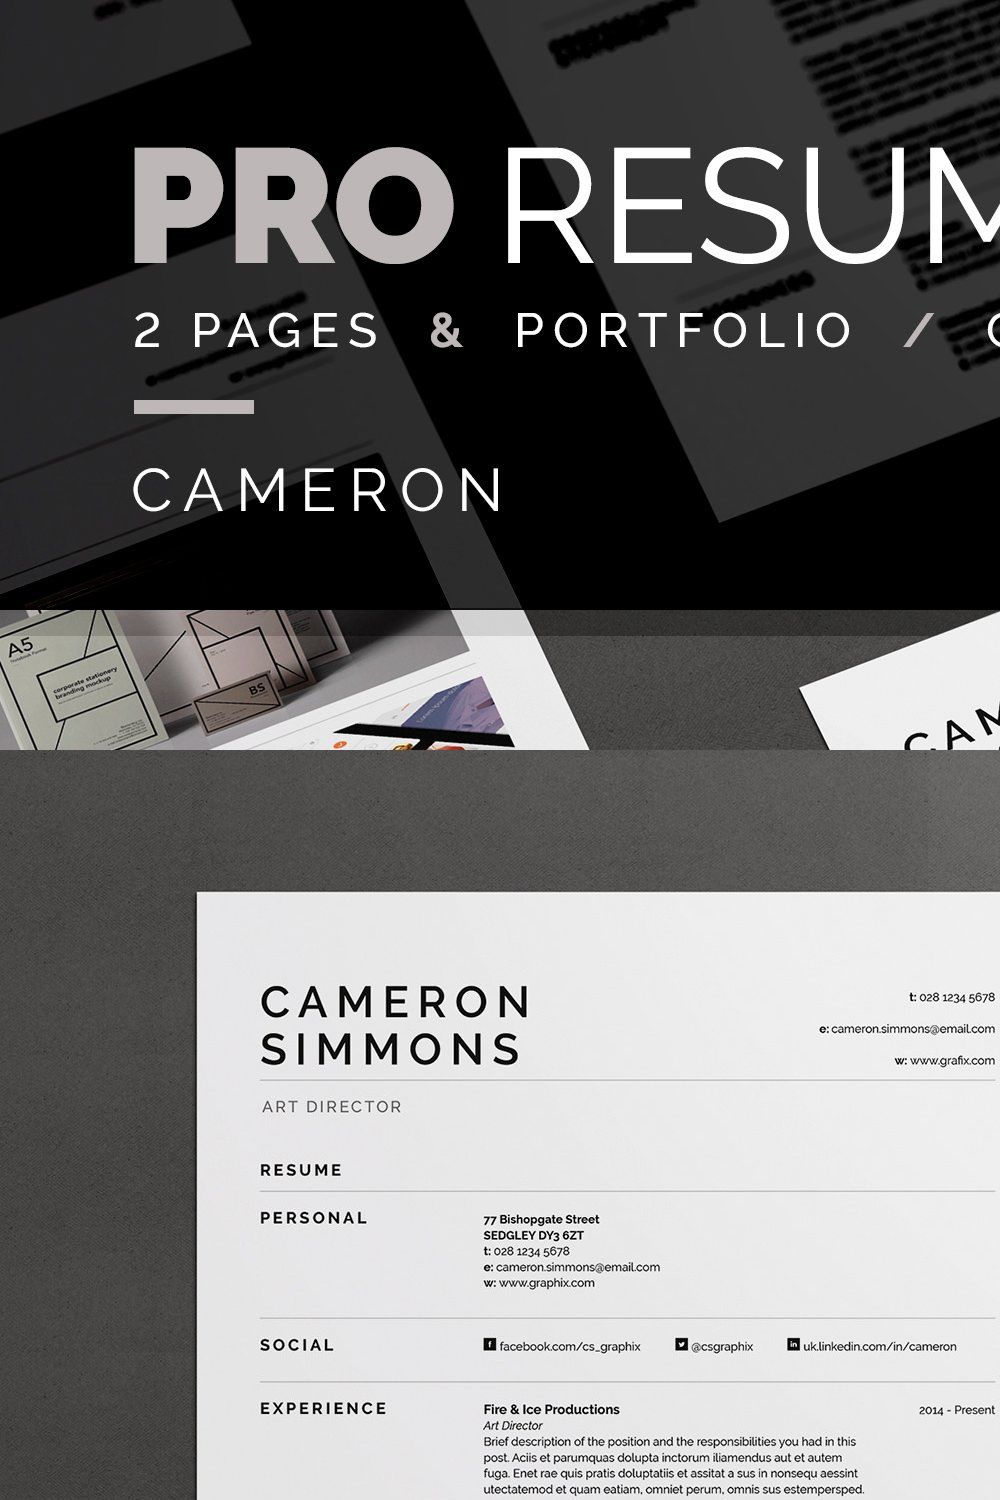 Pro Resume/CV - Cameron pinterest preview image.